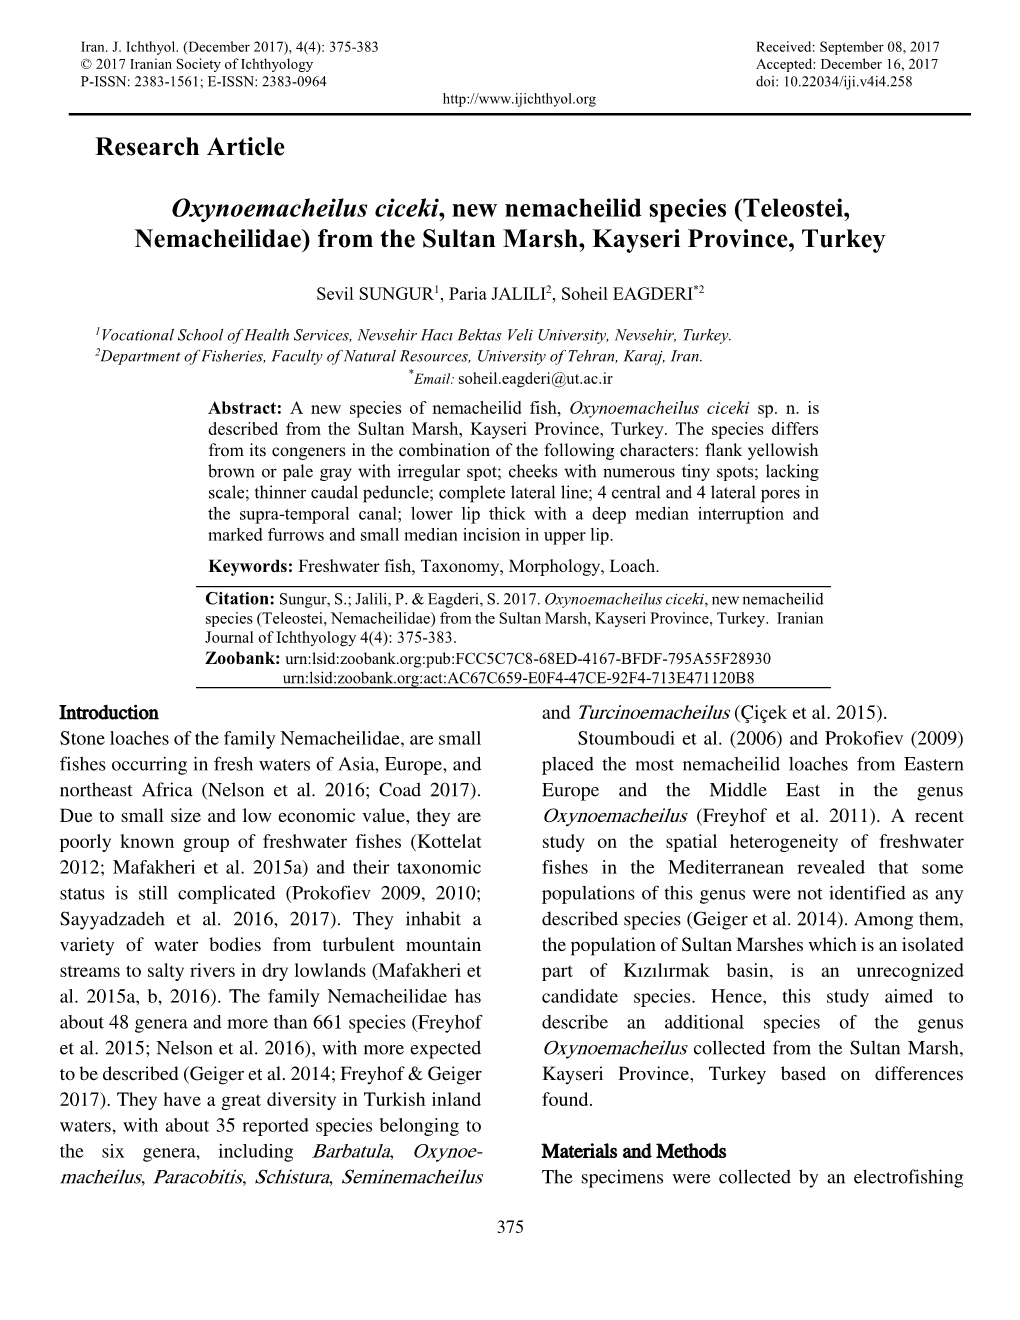 Research Article Oxynoemacheilus Ciceki, New Nemacheilid Species